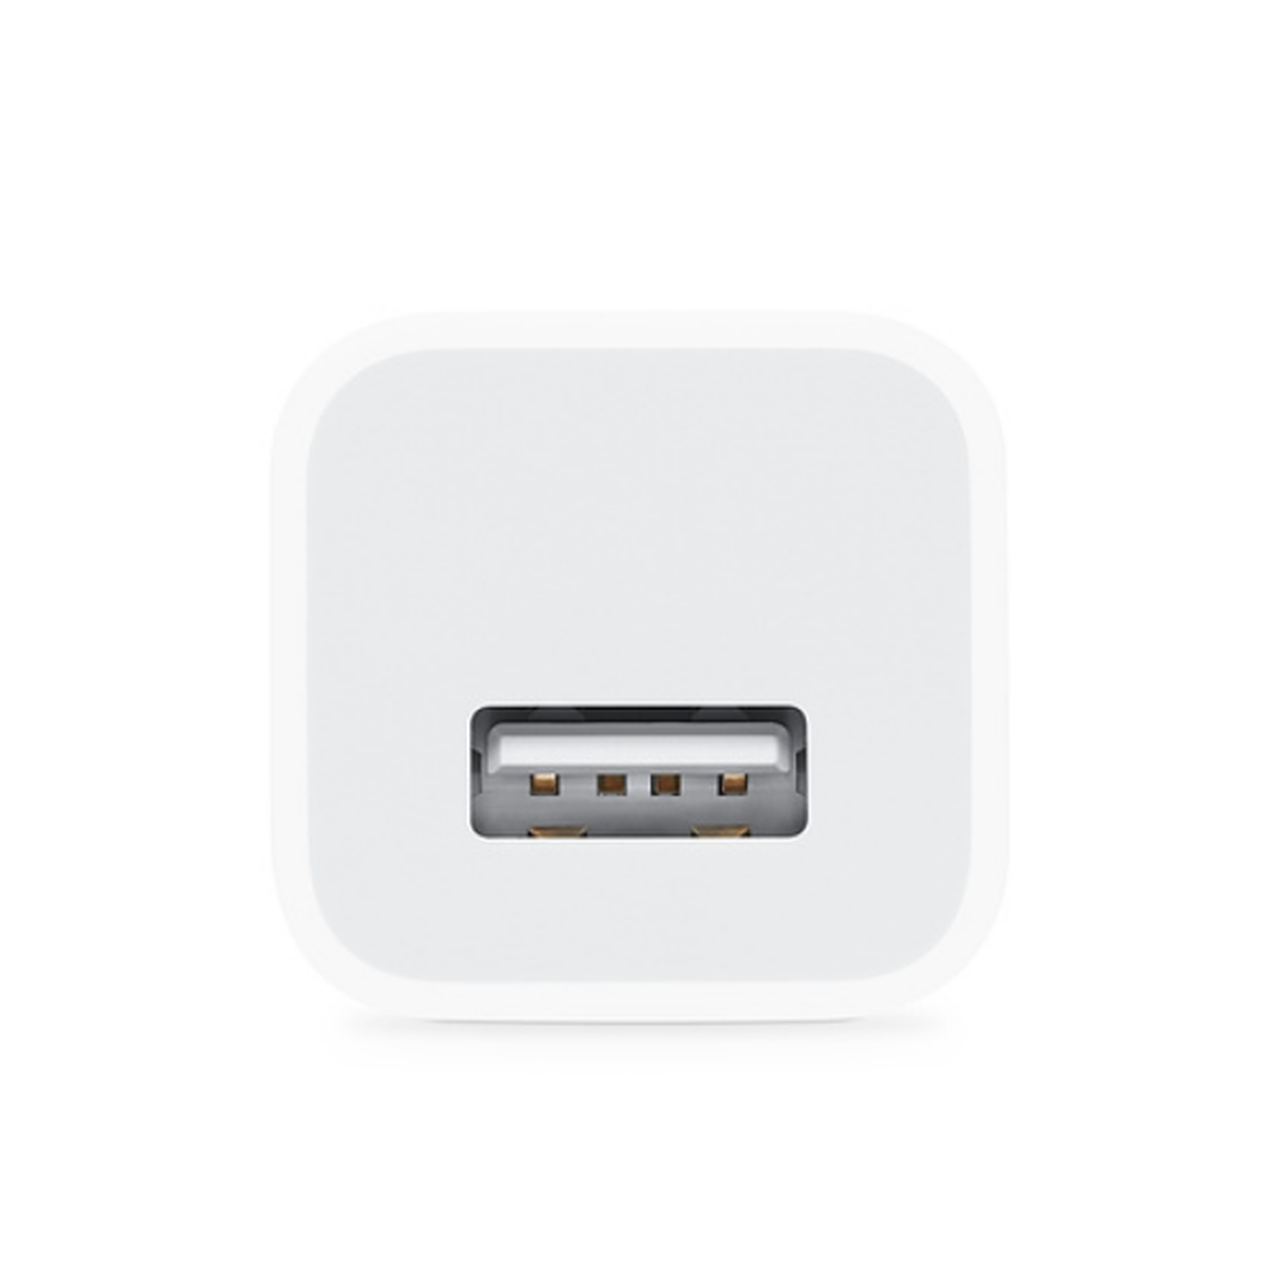 Adapteur de Charge mural USB 5 W - Blanc